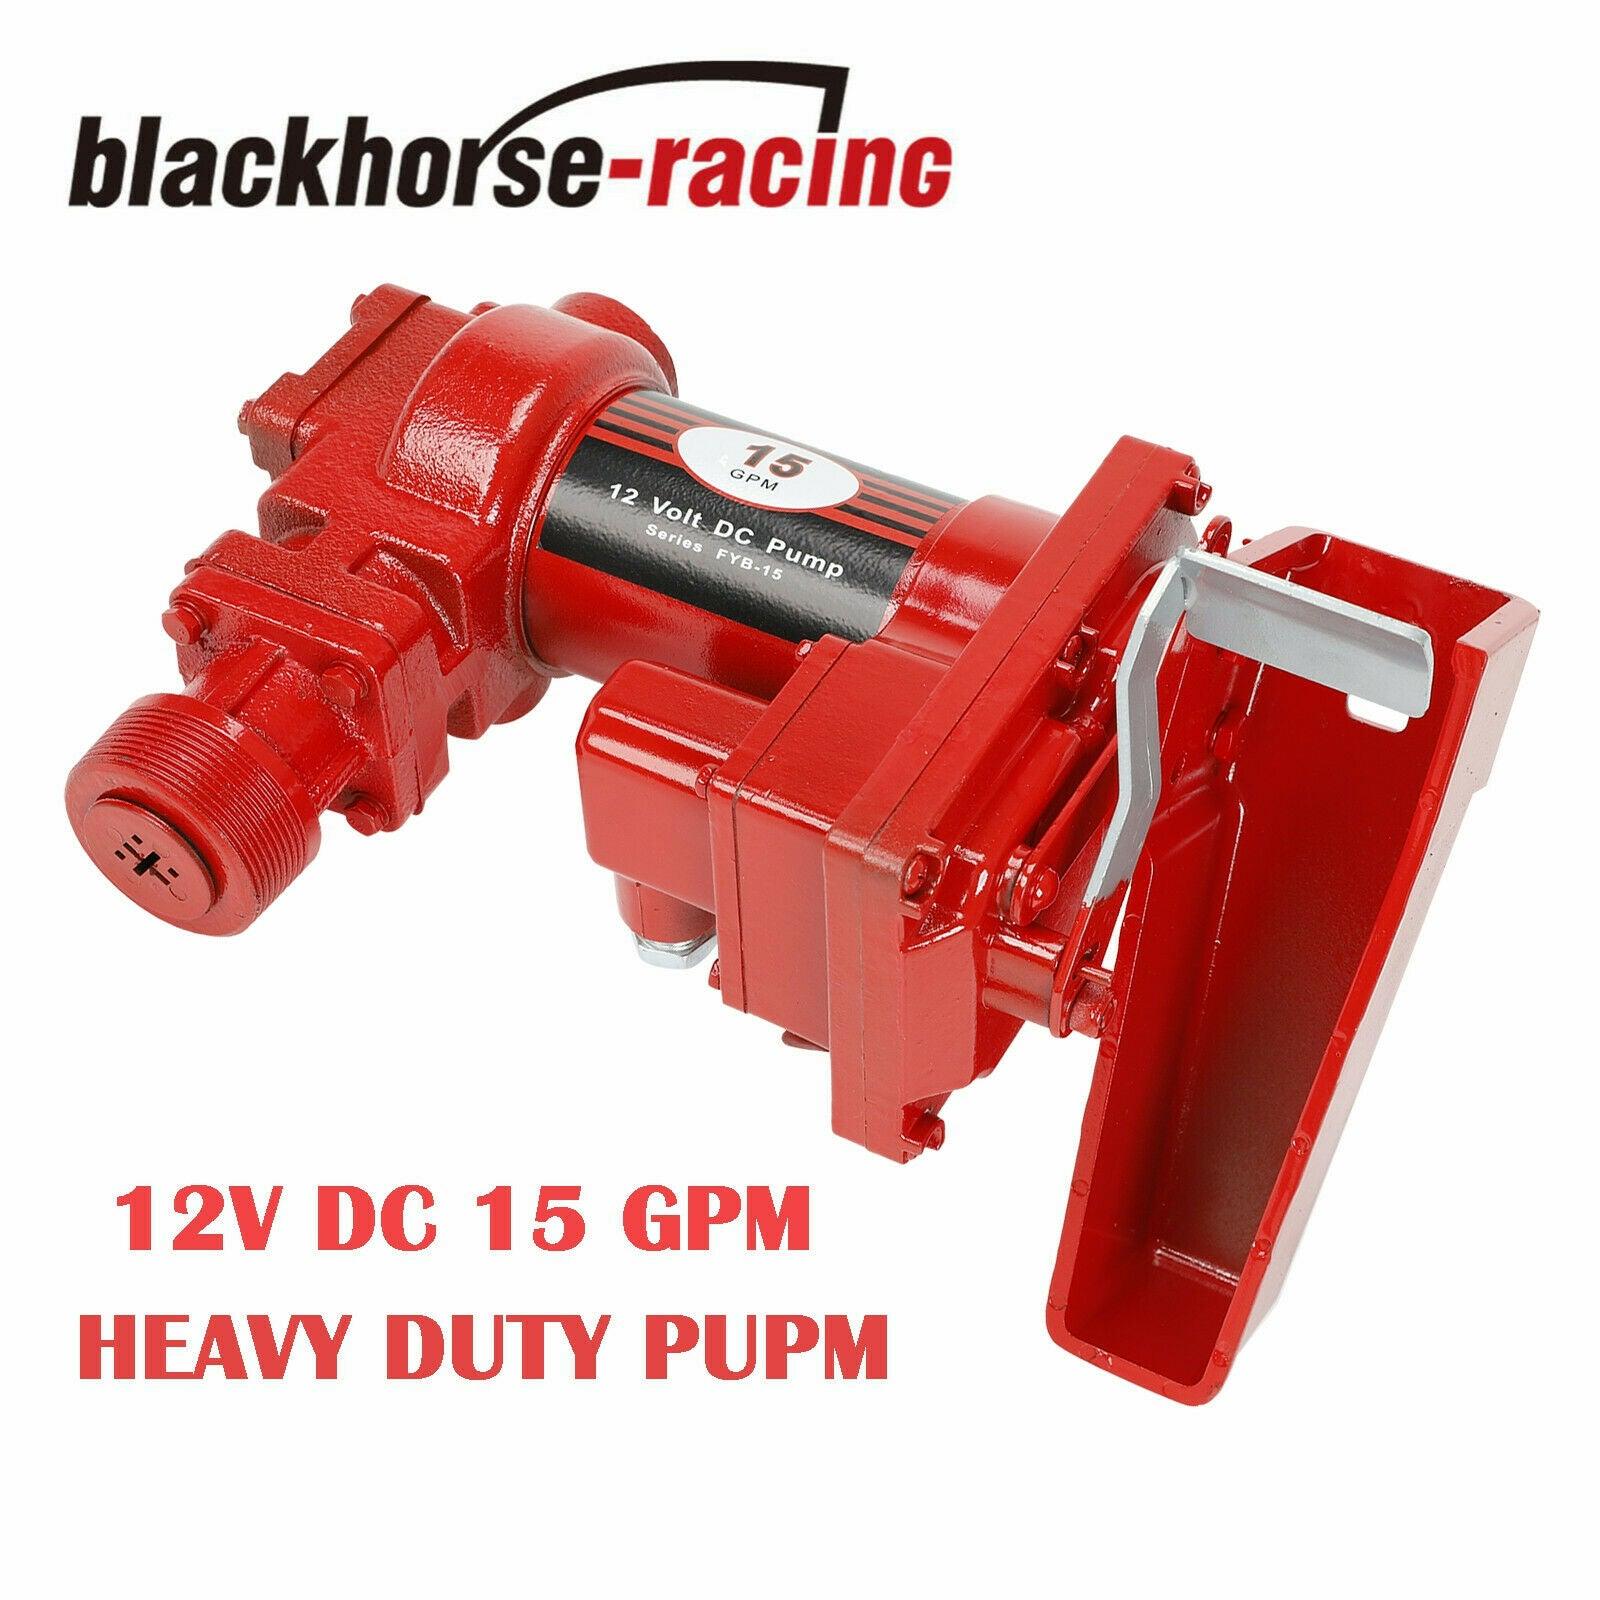 Heavy Duty Series FBY-15 12V DC Pump 15 GPM Rotary Vane Fuel Gas Transfer Pump - www.blackhorse-racing.com